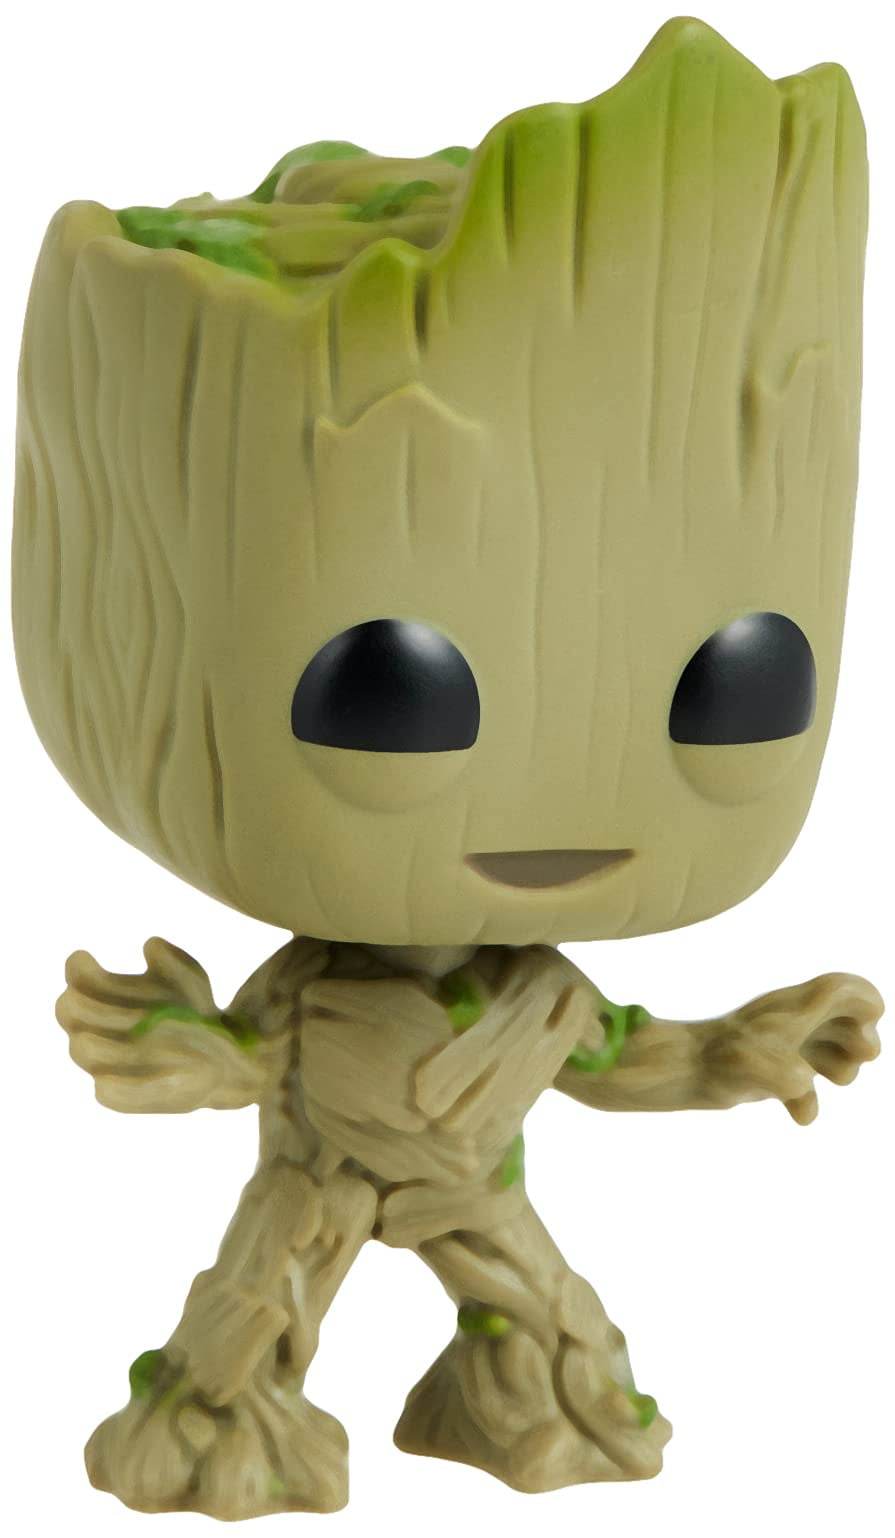 Funko Plush: Guardians of the Galaxy 2 Groot Plush Toy Figure